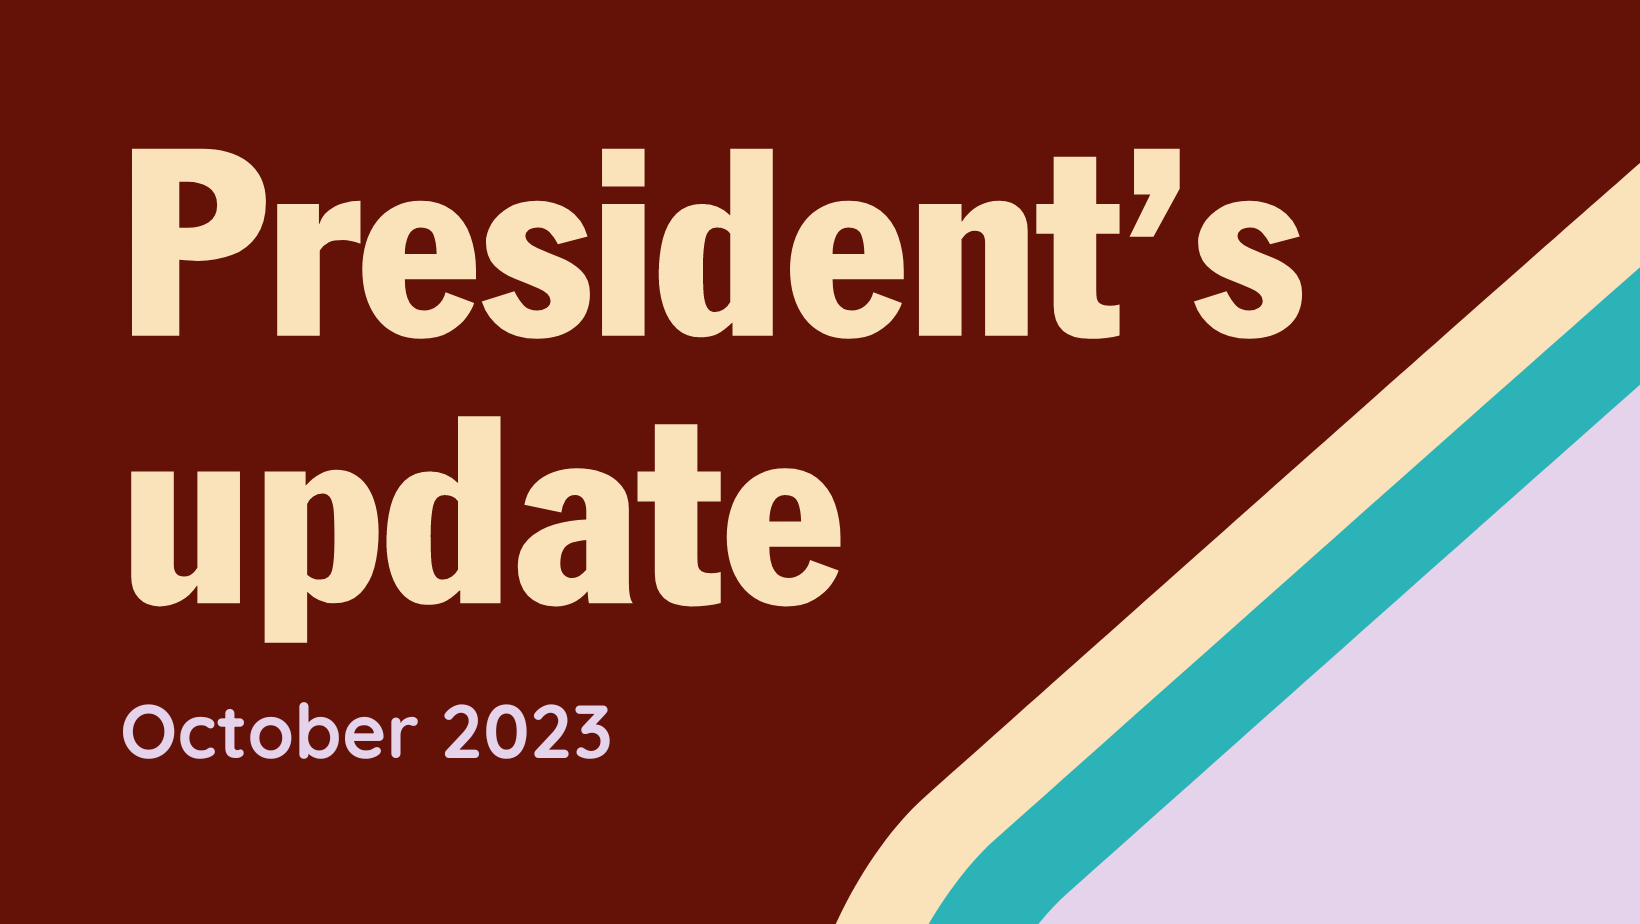 President's update October 2023